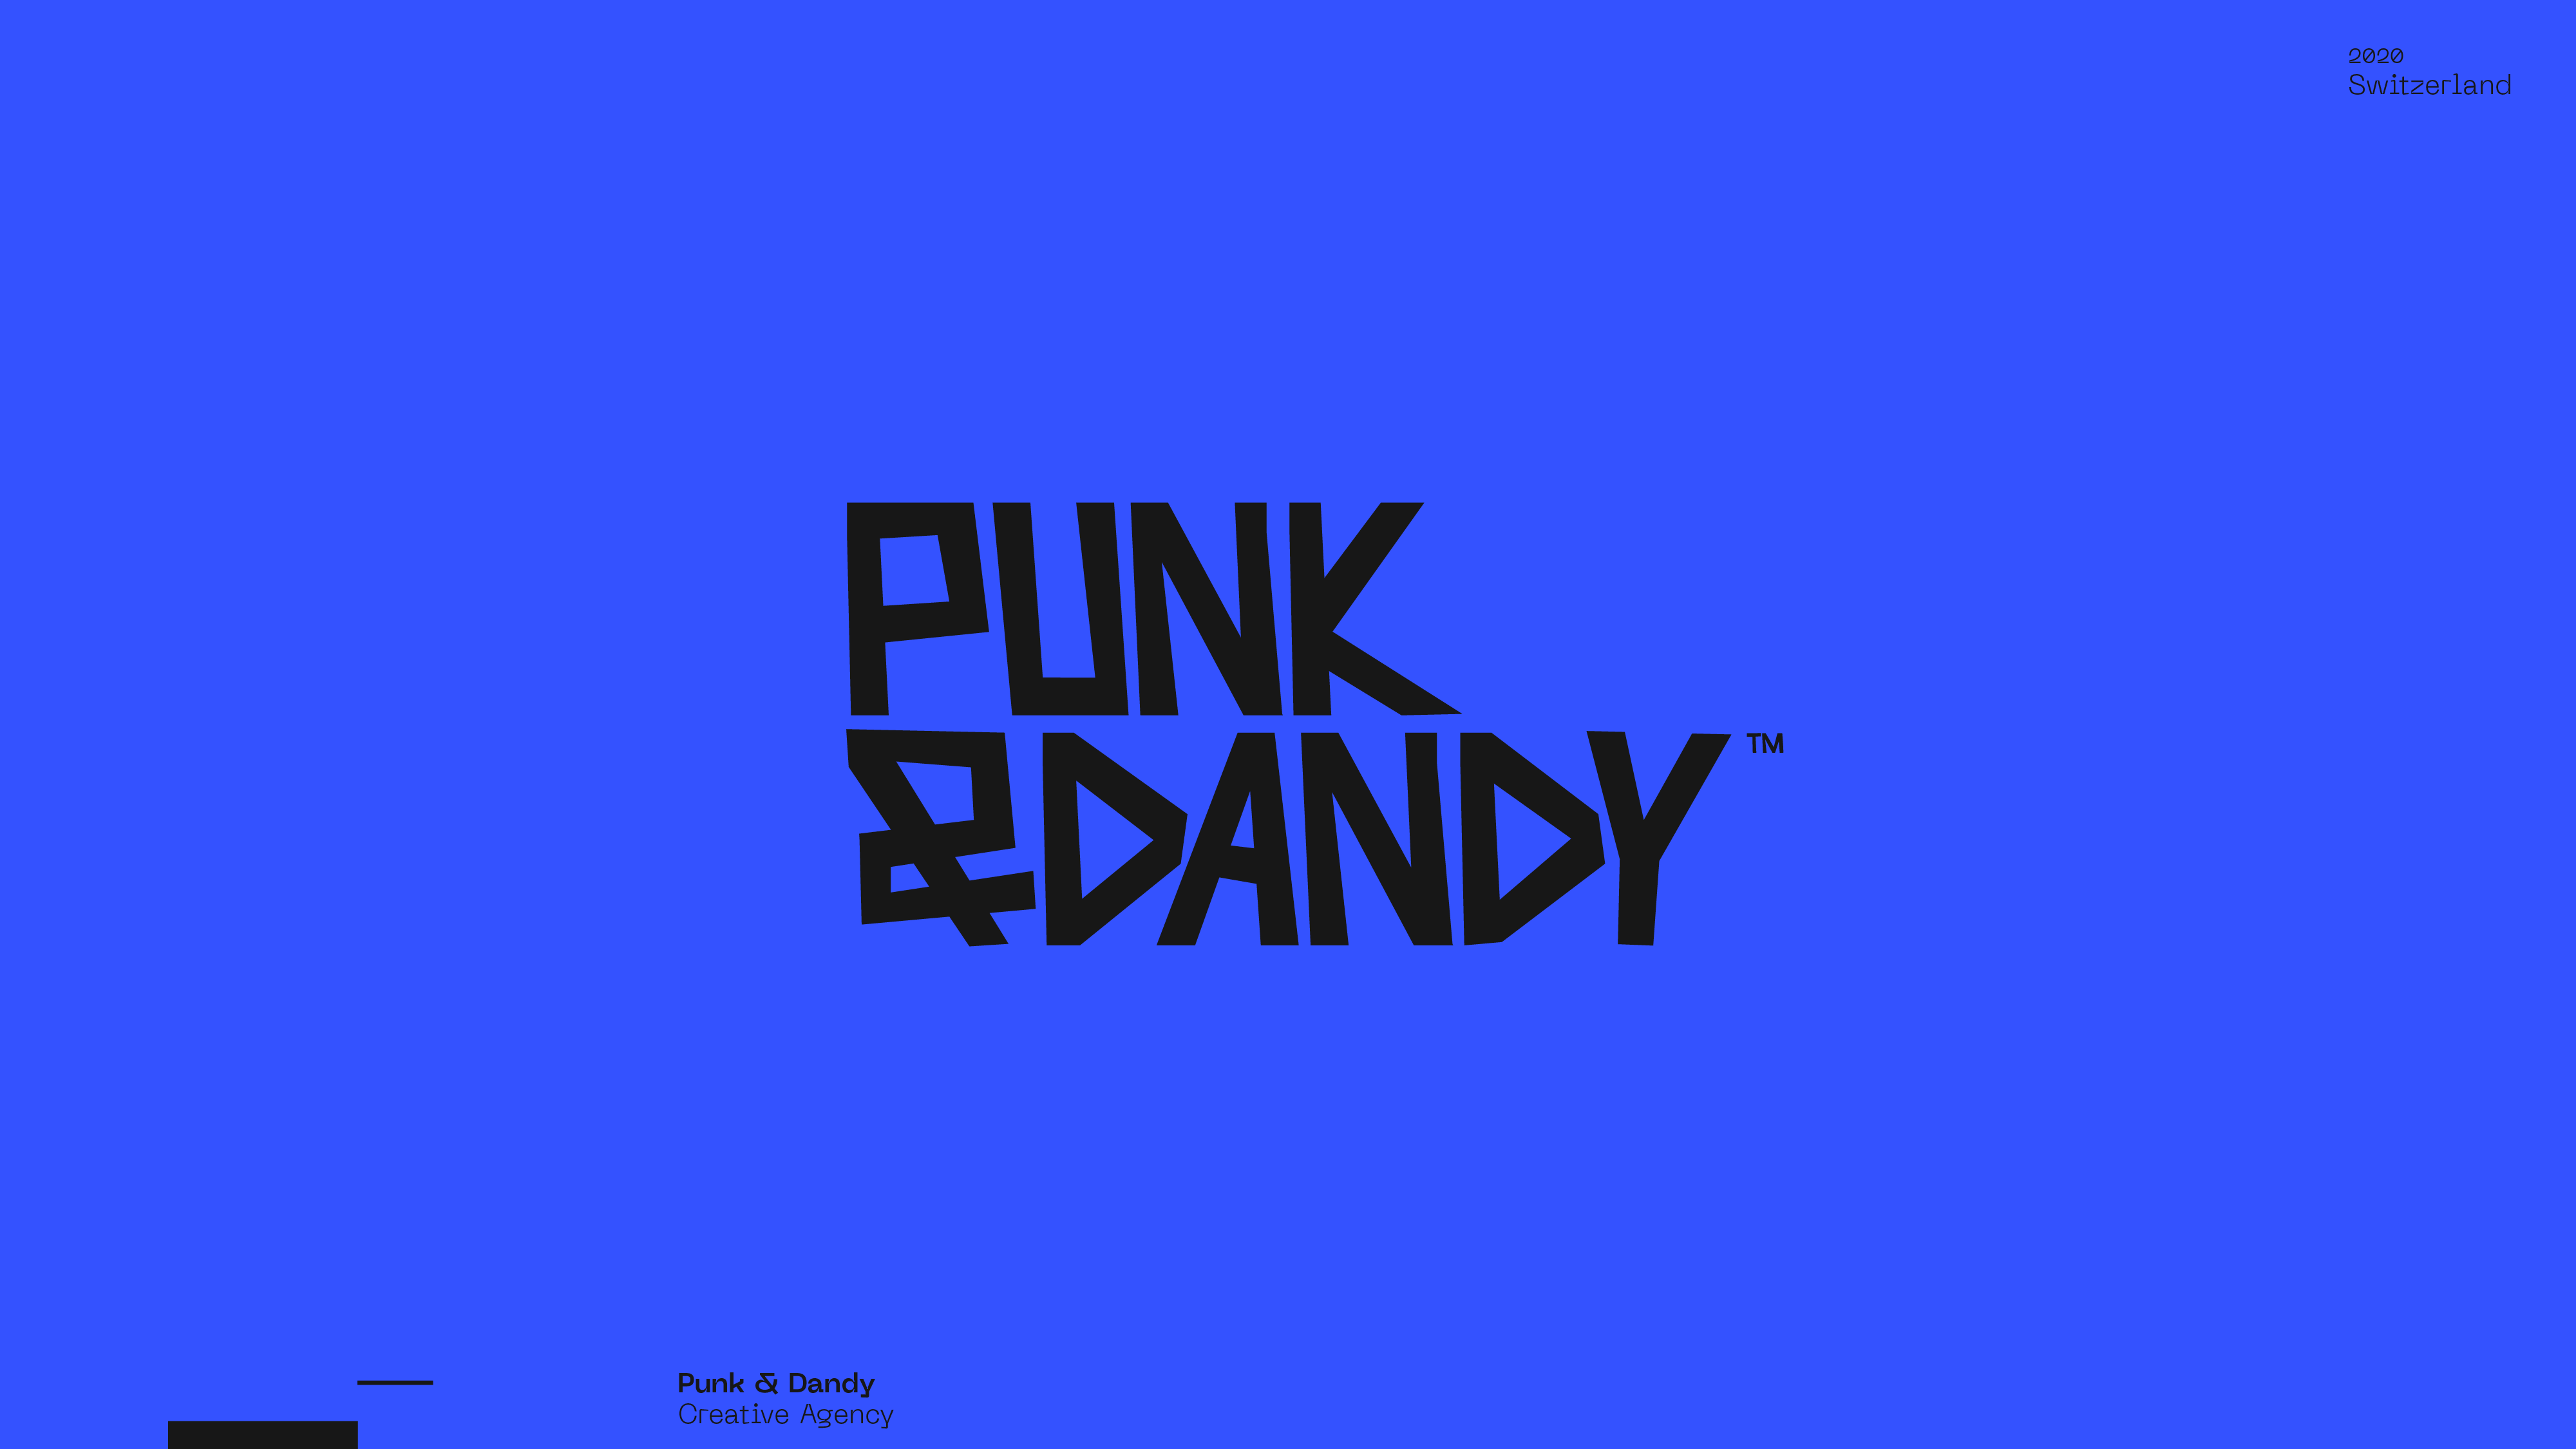 Guapo Design Studio by Esteban Ibarra Logofolio 2020 logo design —Punk & Dandy